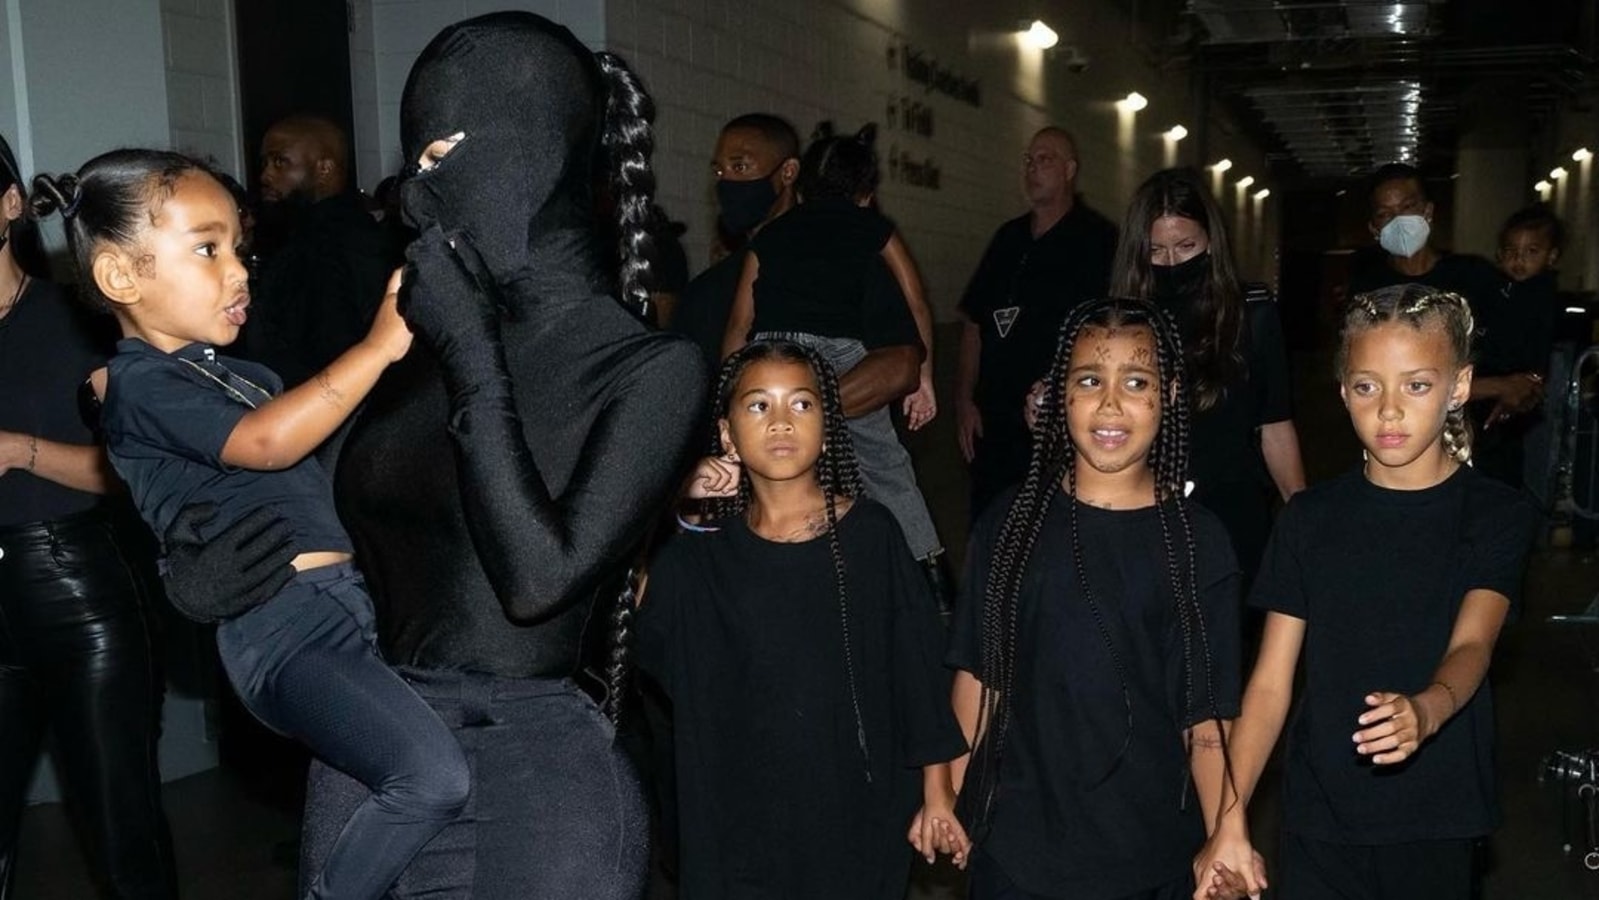 Kim Kardashian Wore Black Mask and Bodysuit at People's Choice Awards